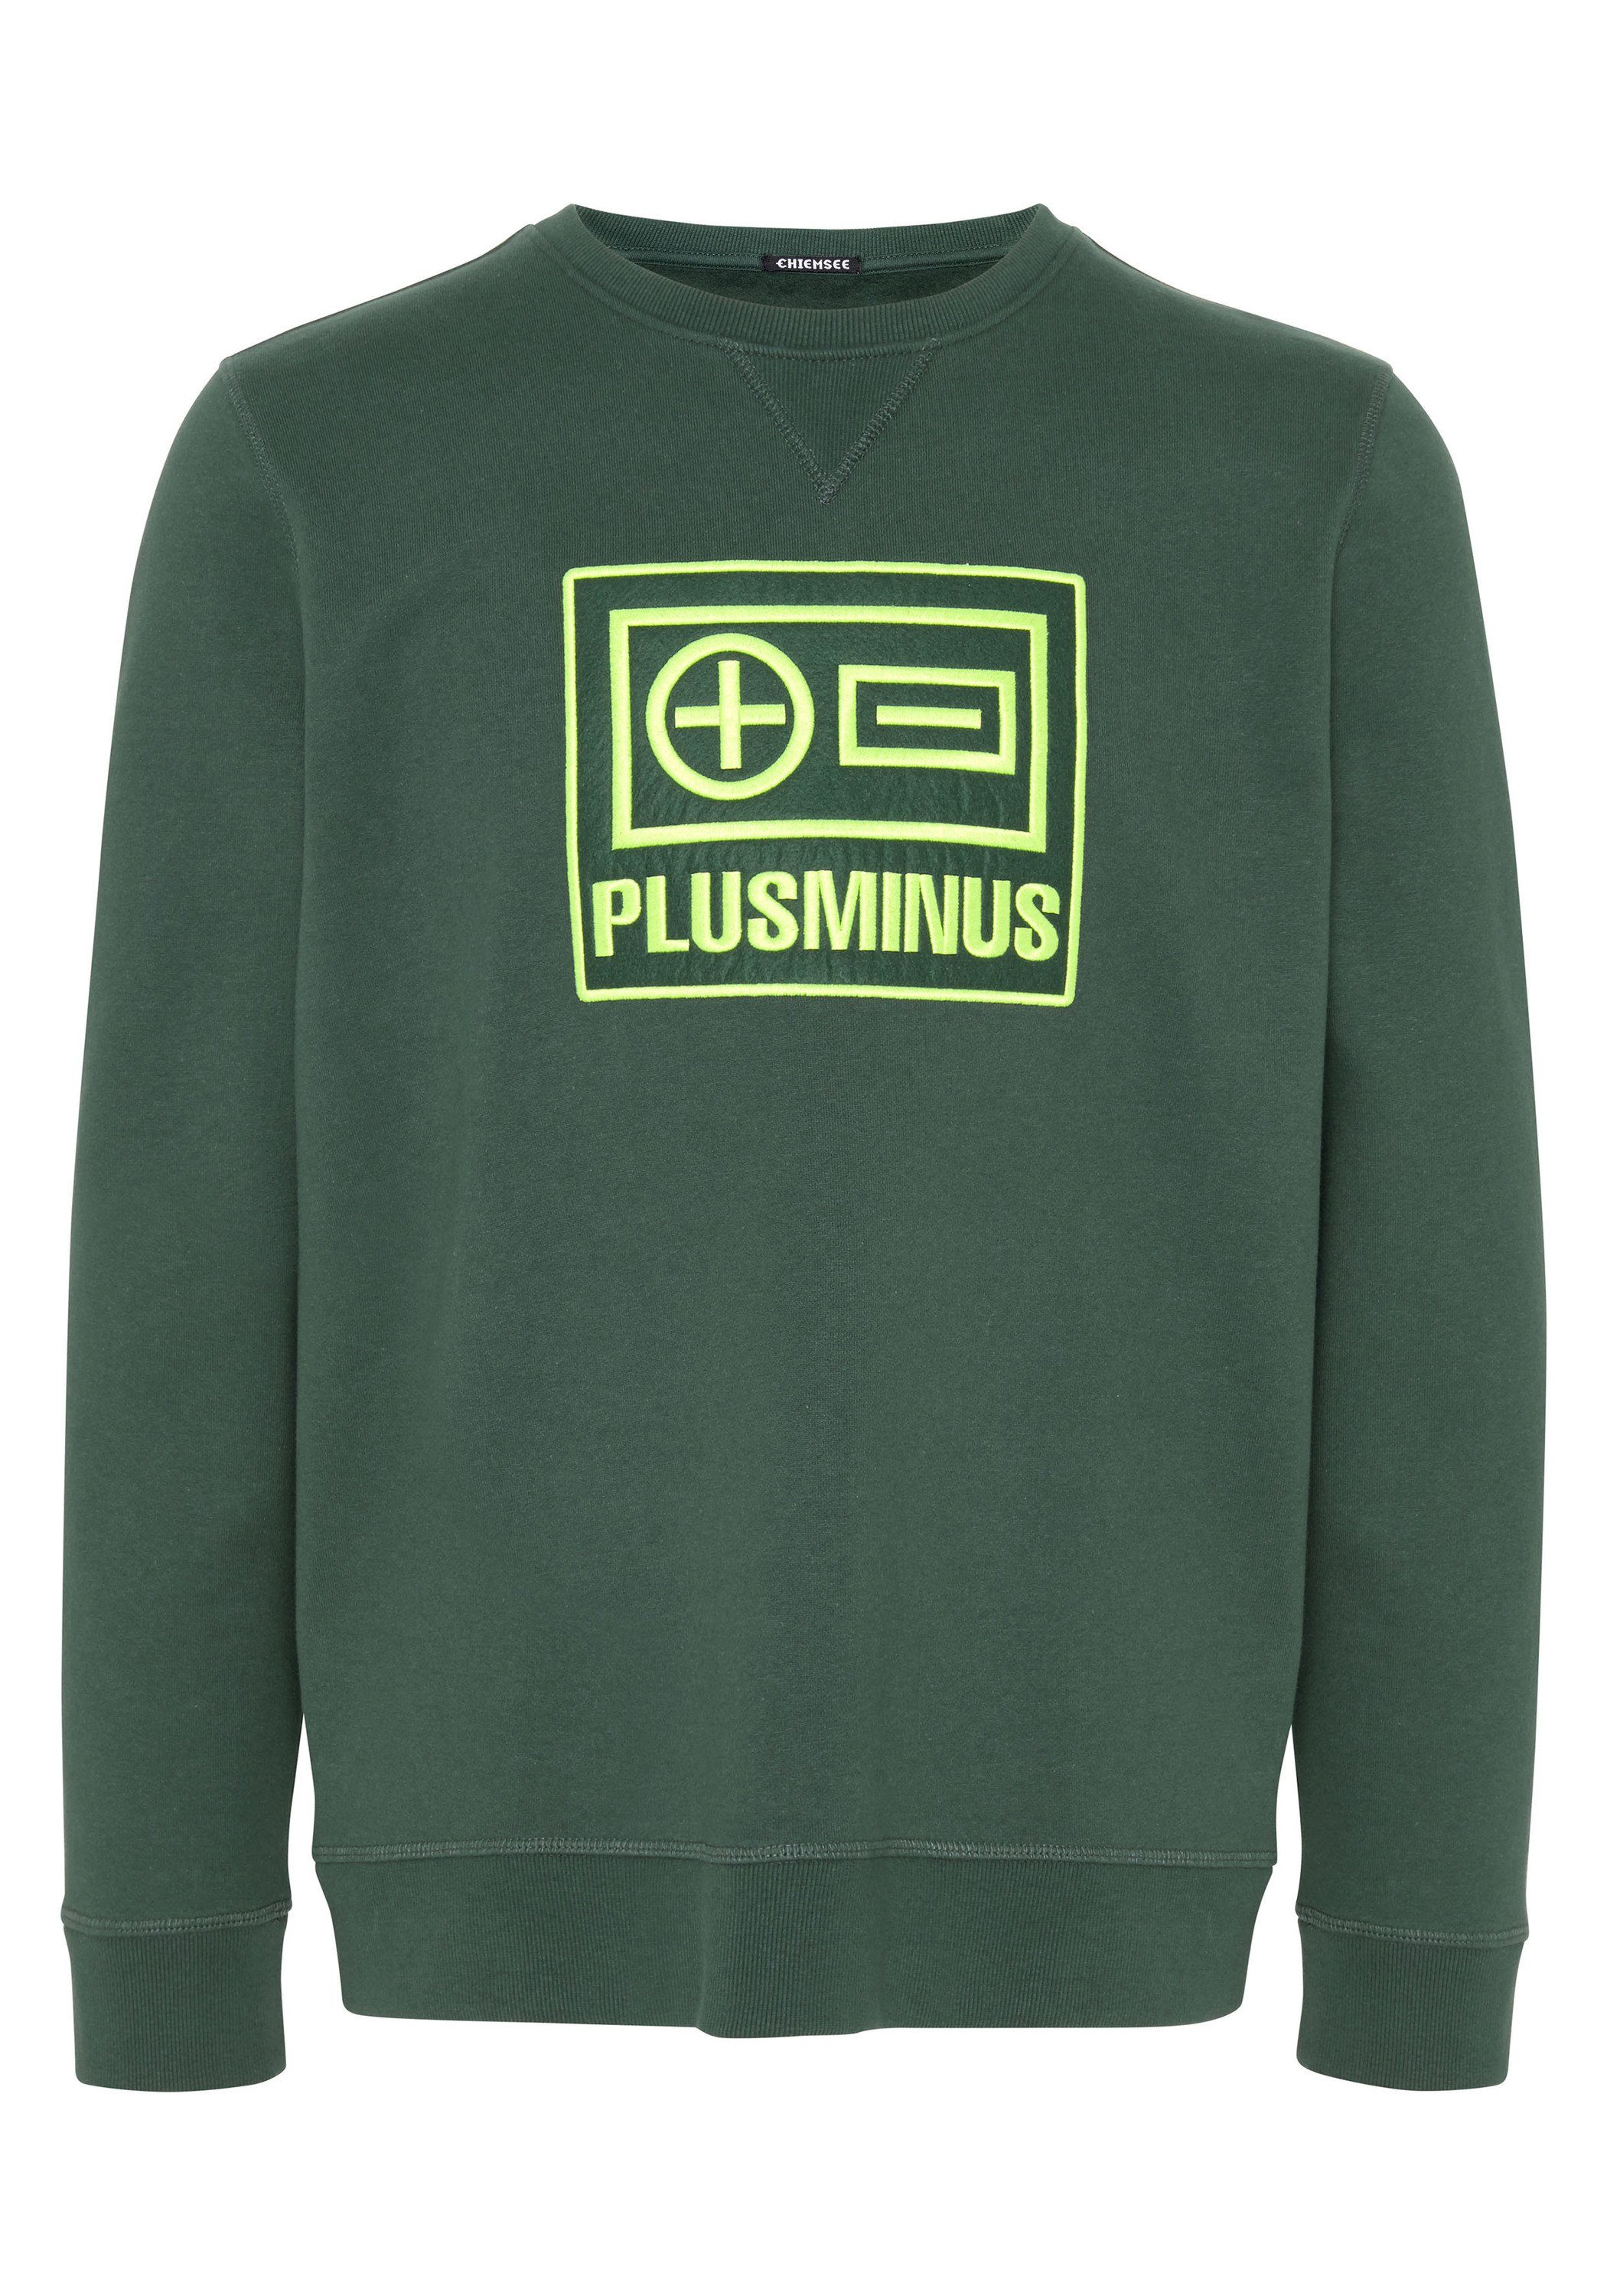 Chiemsee Sweatshirt Sweatshirt im trendigen PlusMinus-Design 1 dunkel grün